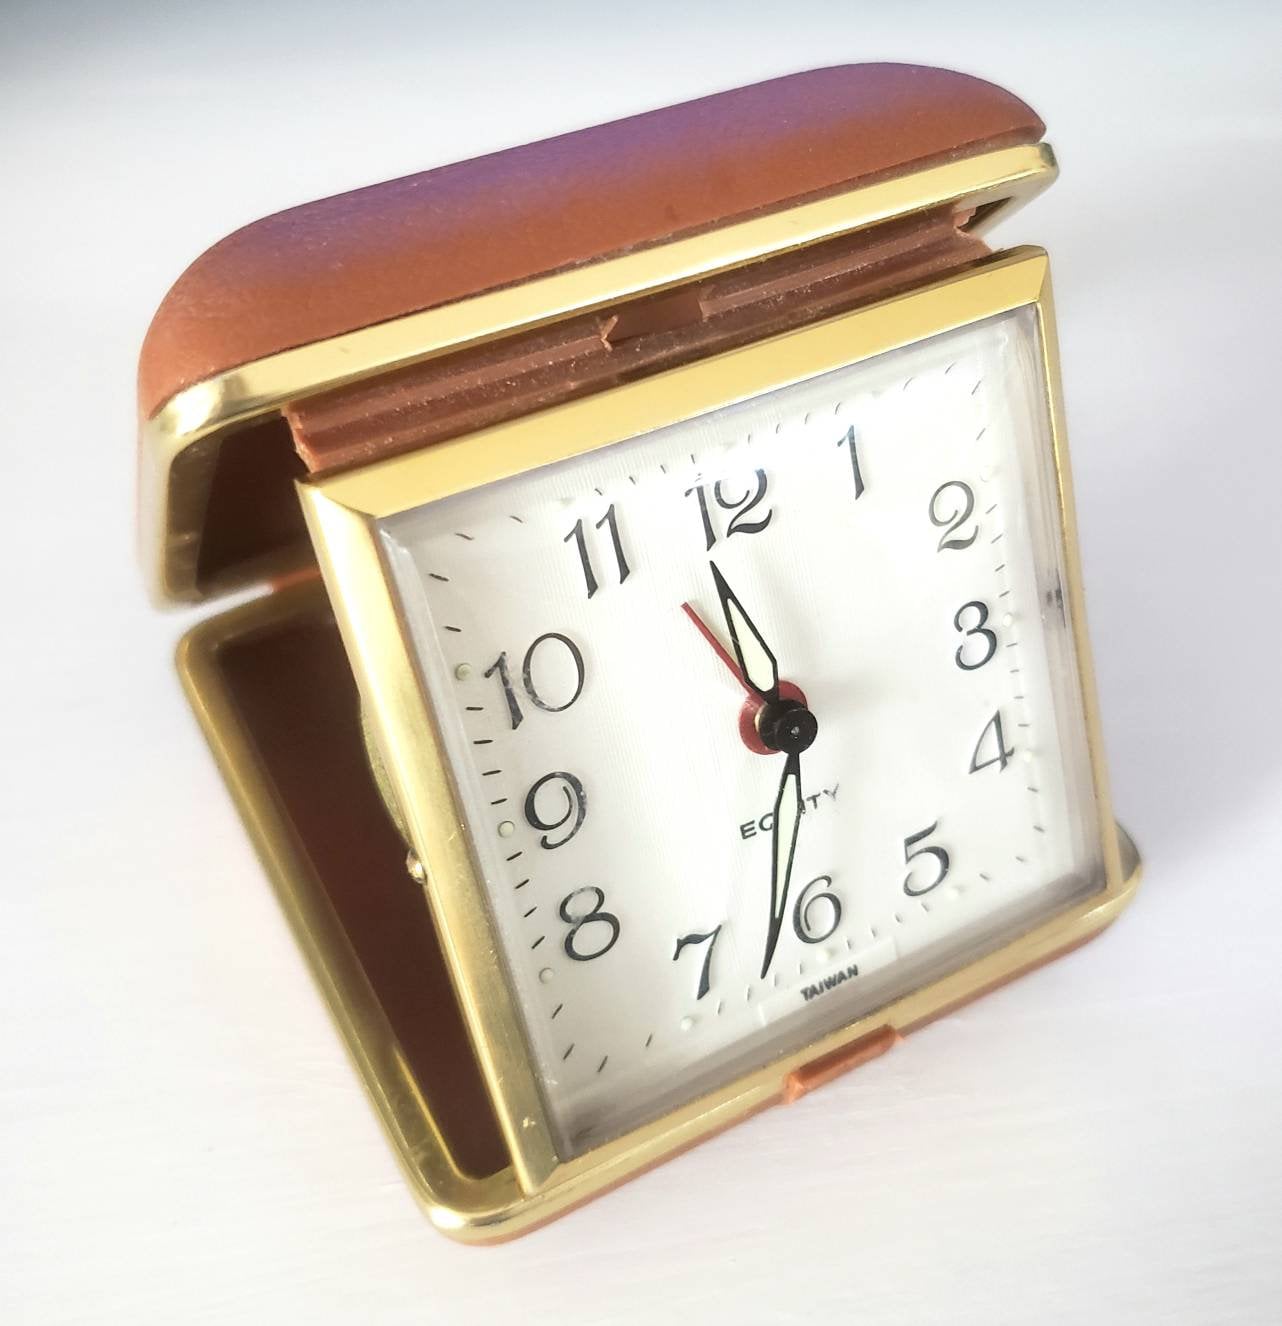 equity travel alarm clock